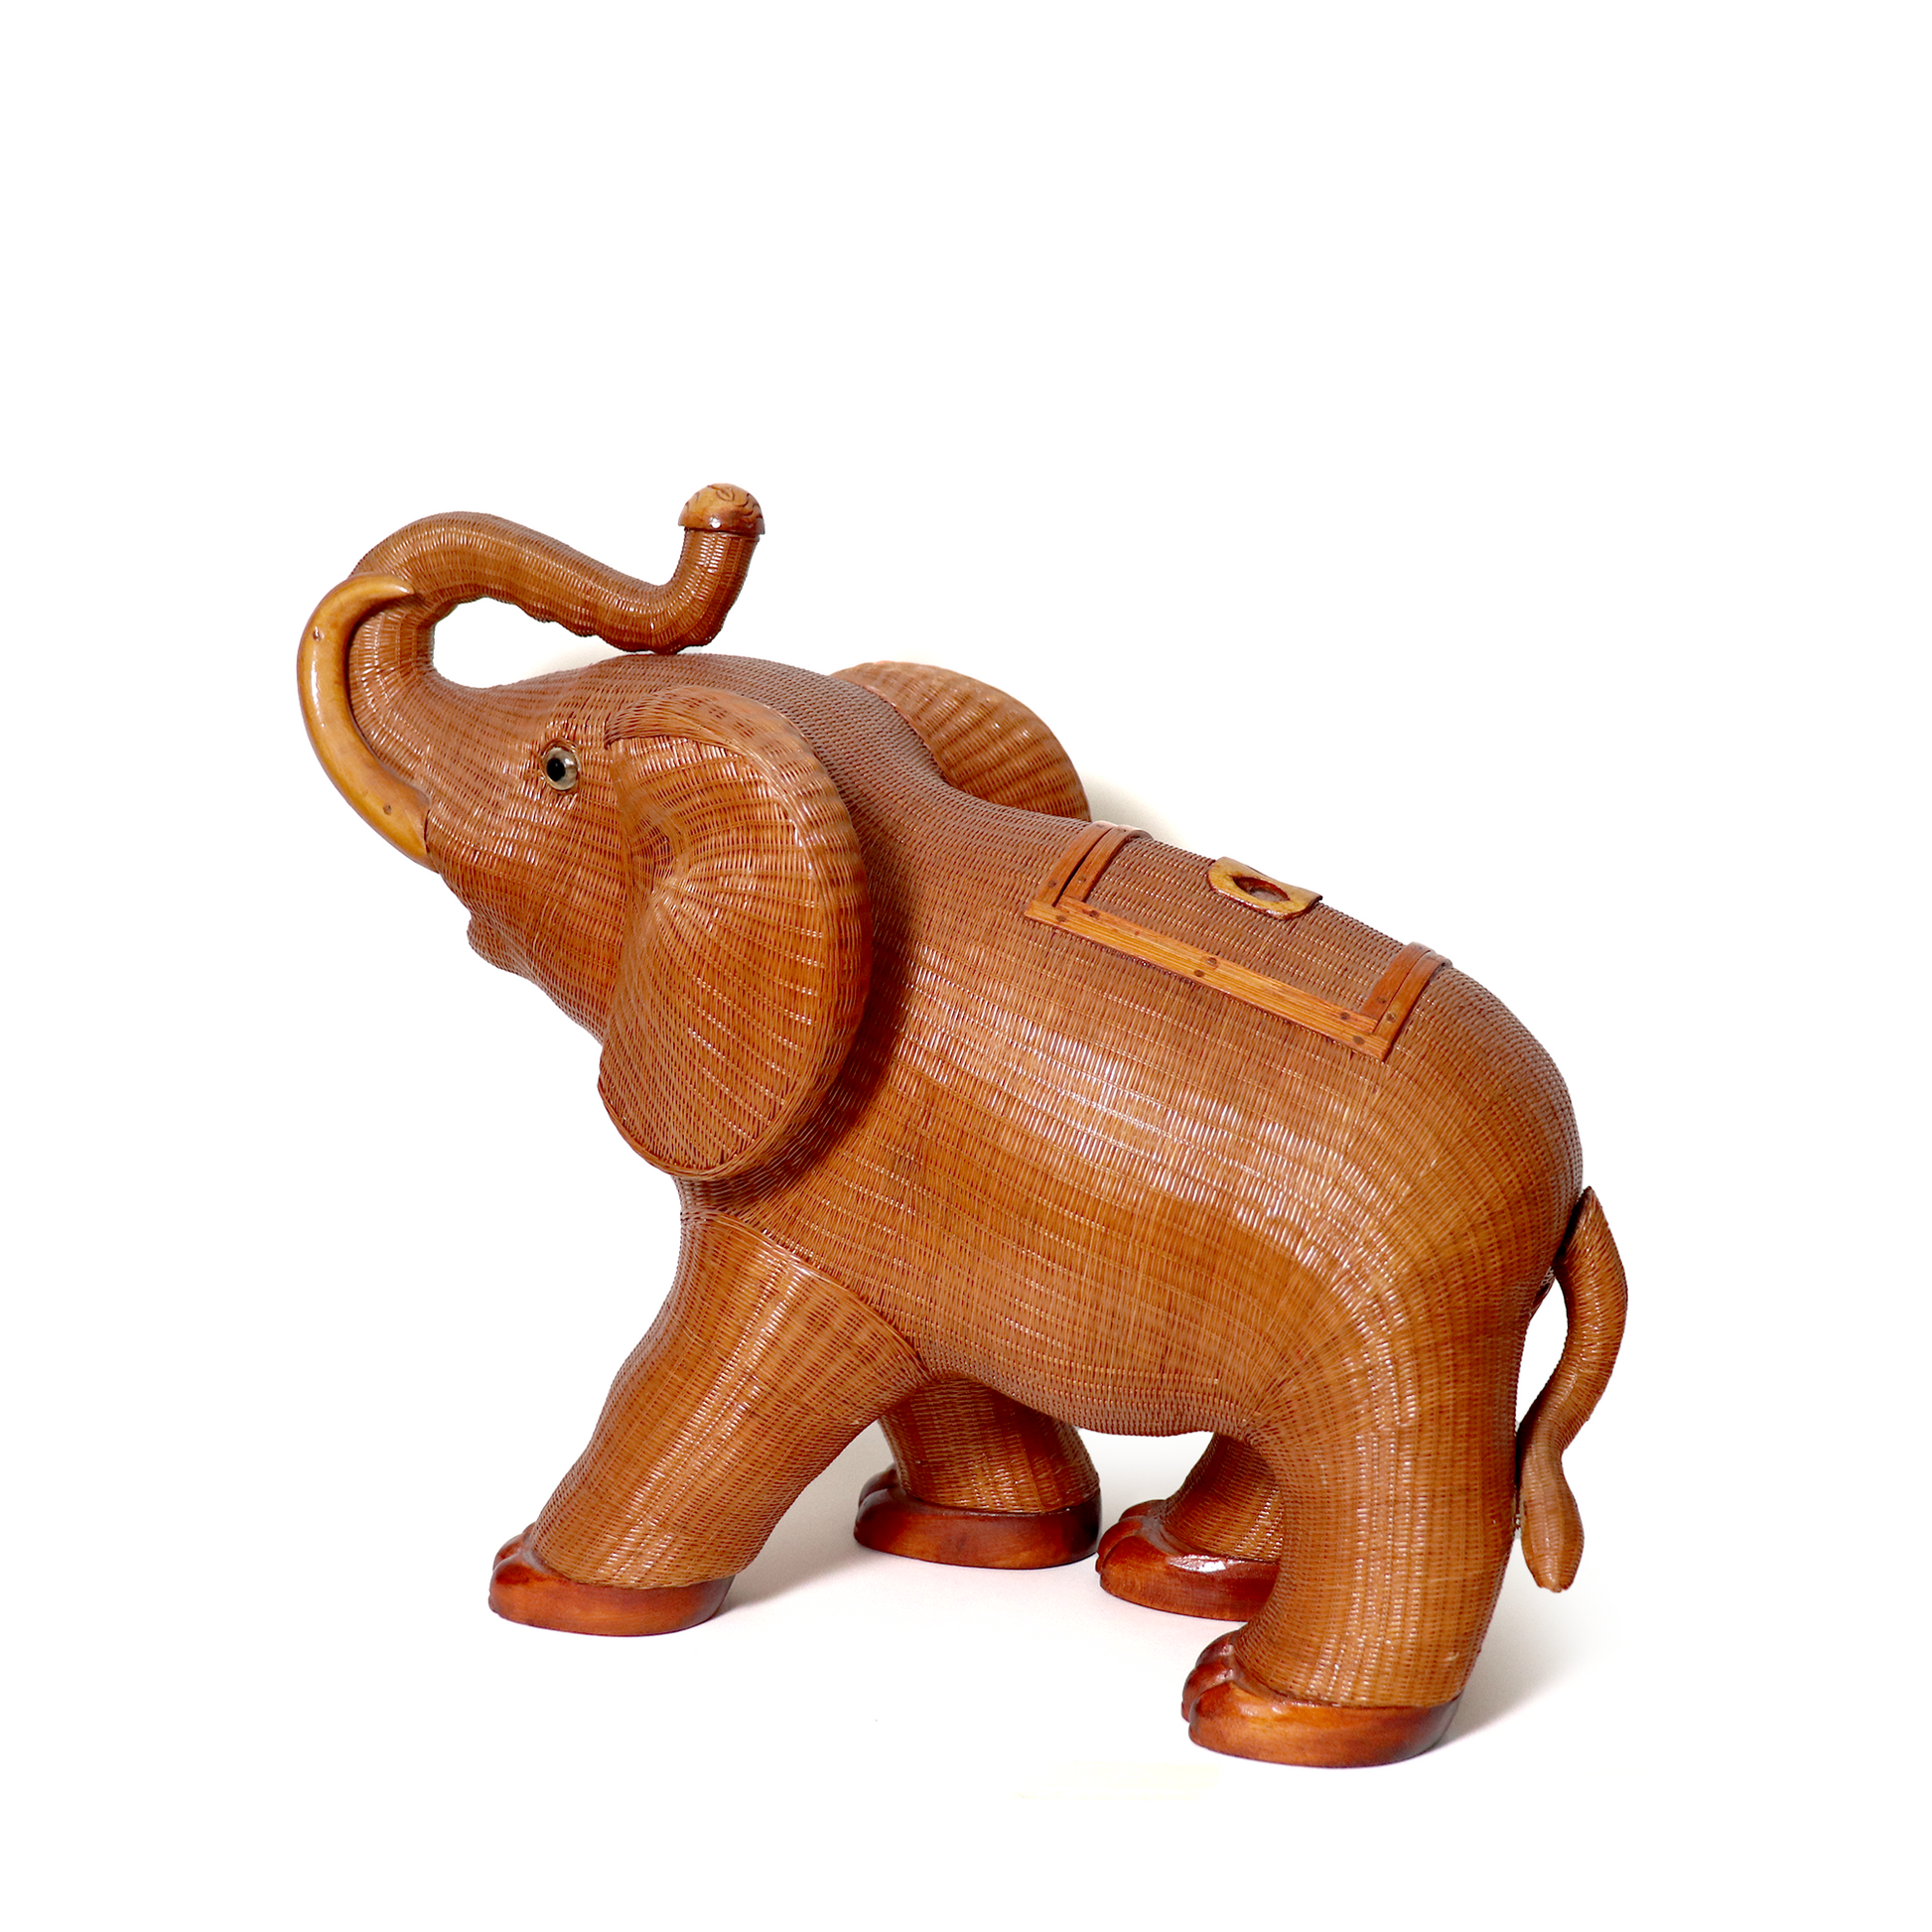 Chinese wicker elephant box